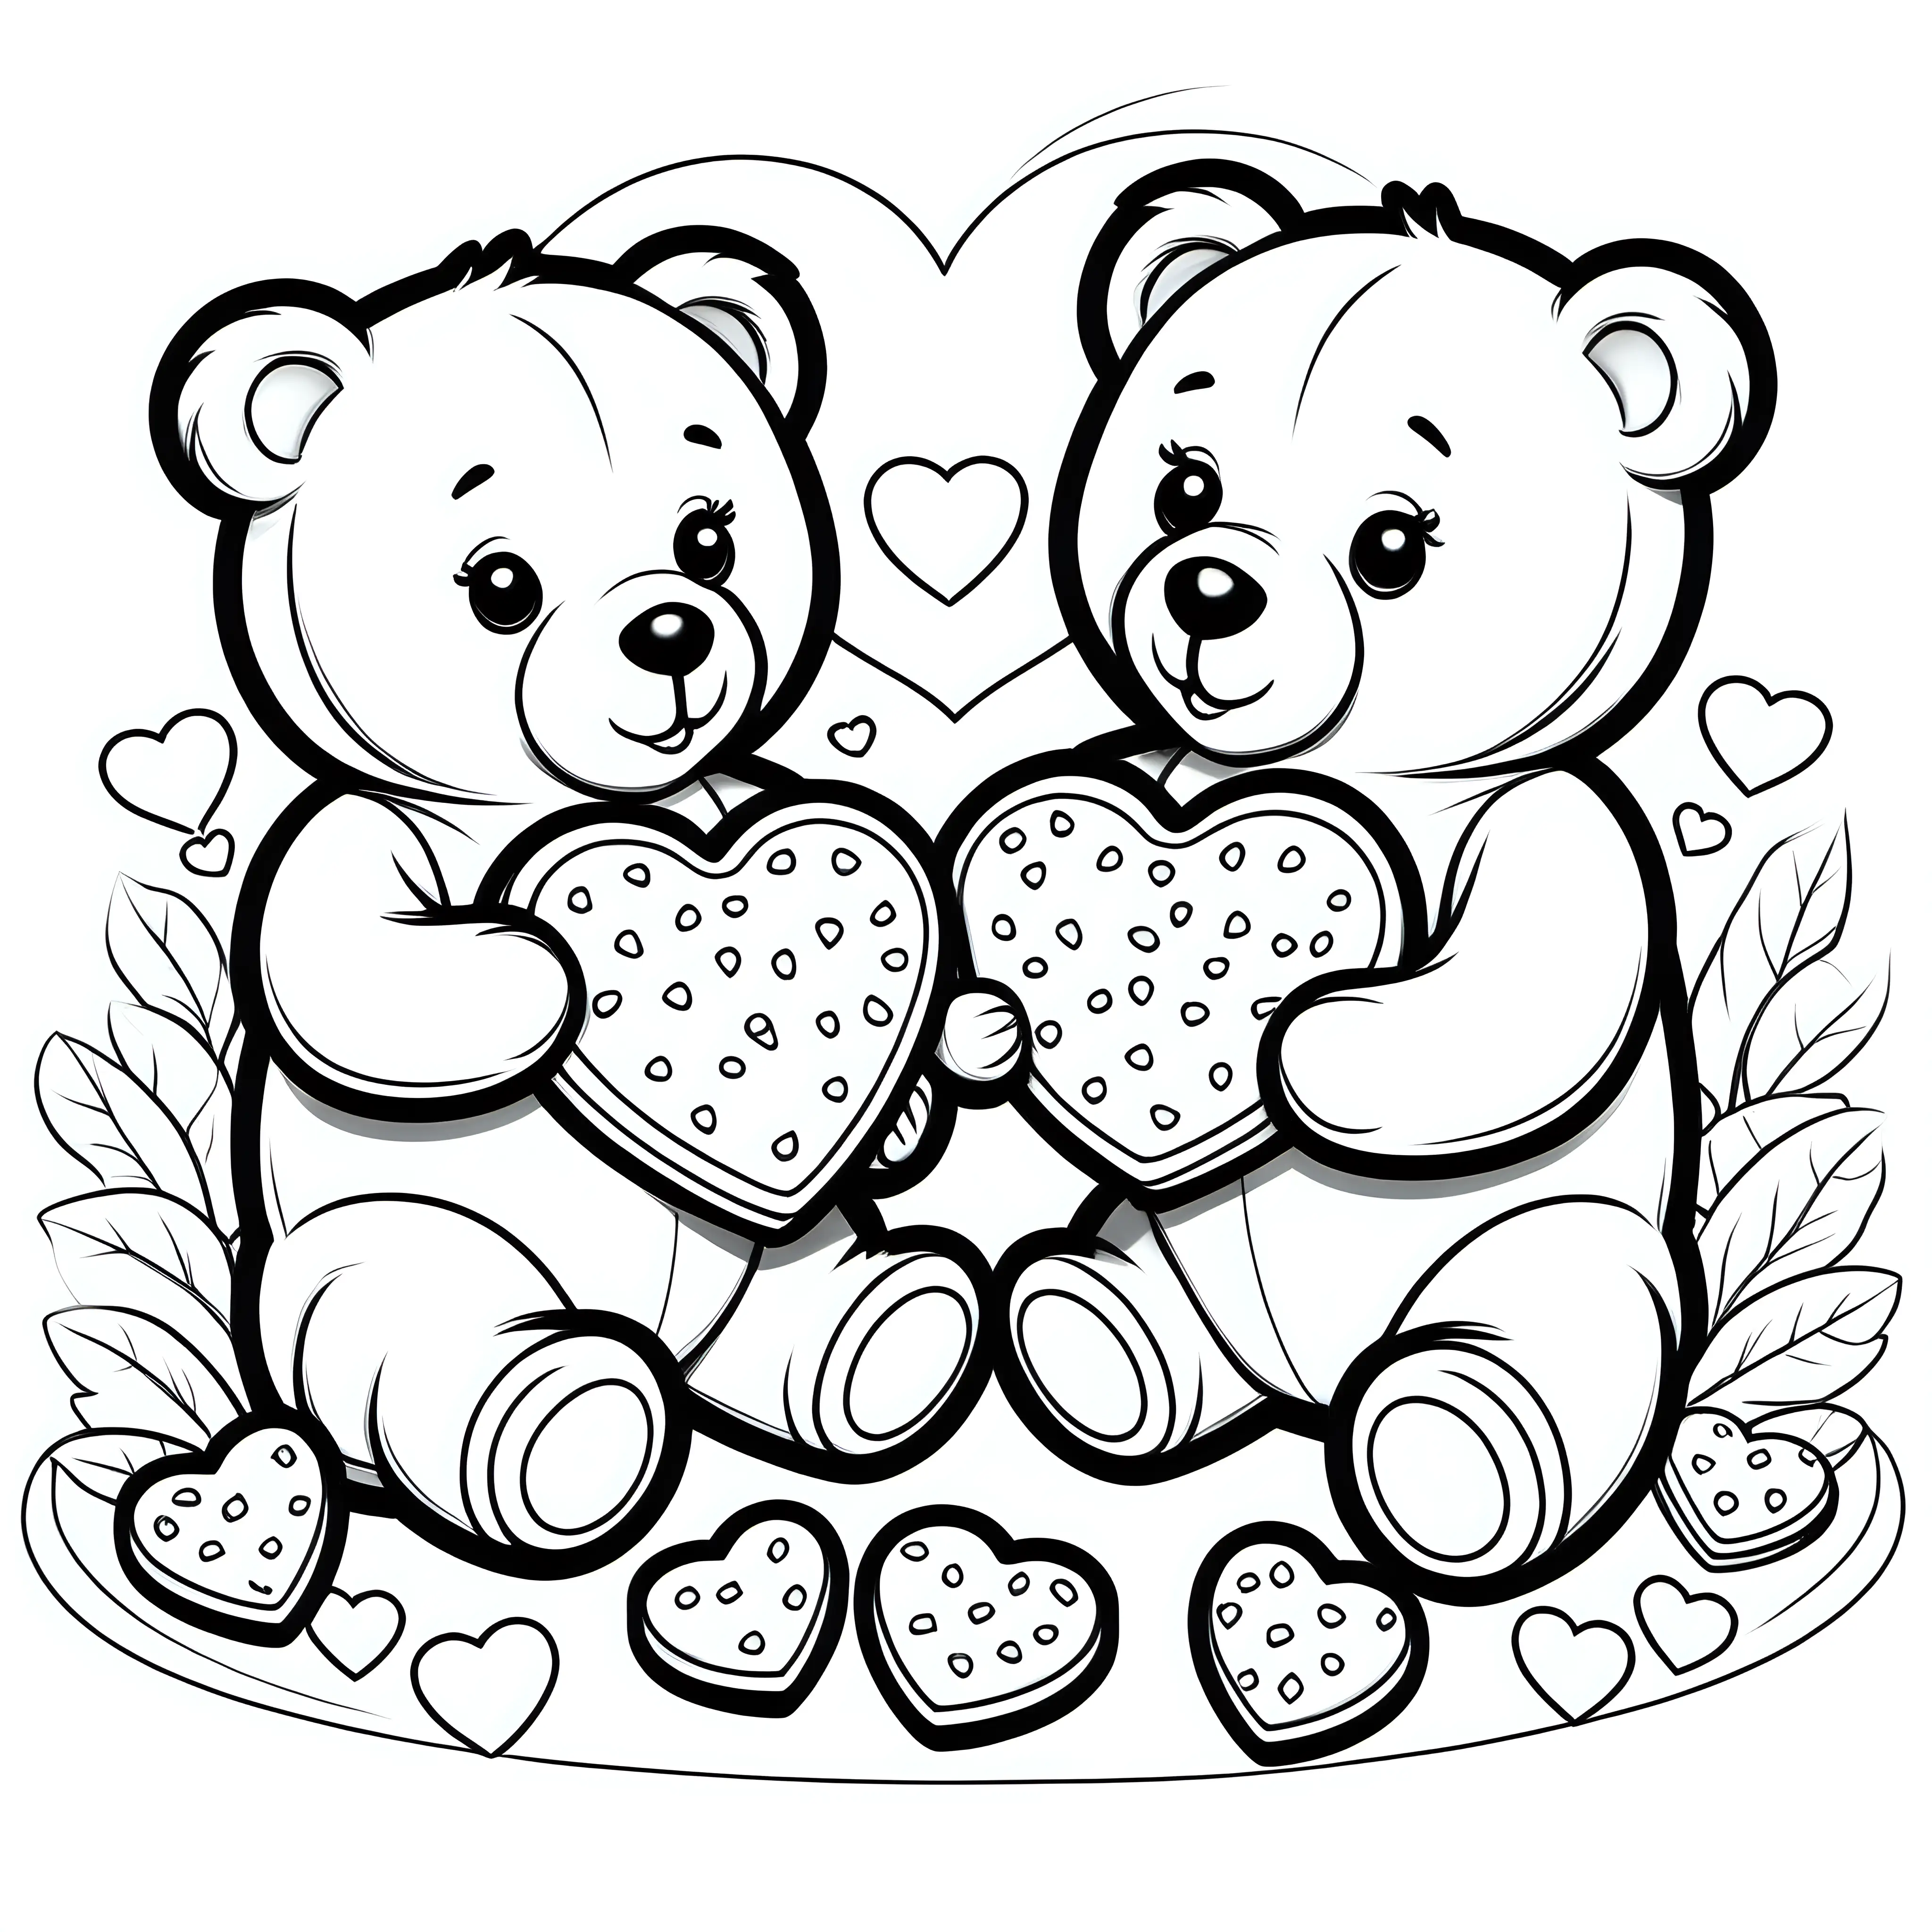 Adorable Teddy Bears Coloring Heartshaped Cookies Illustration